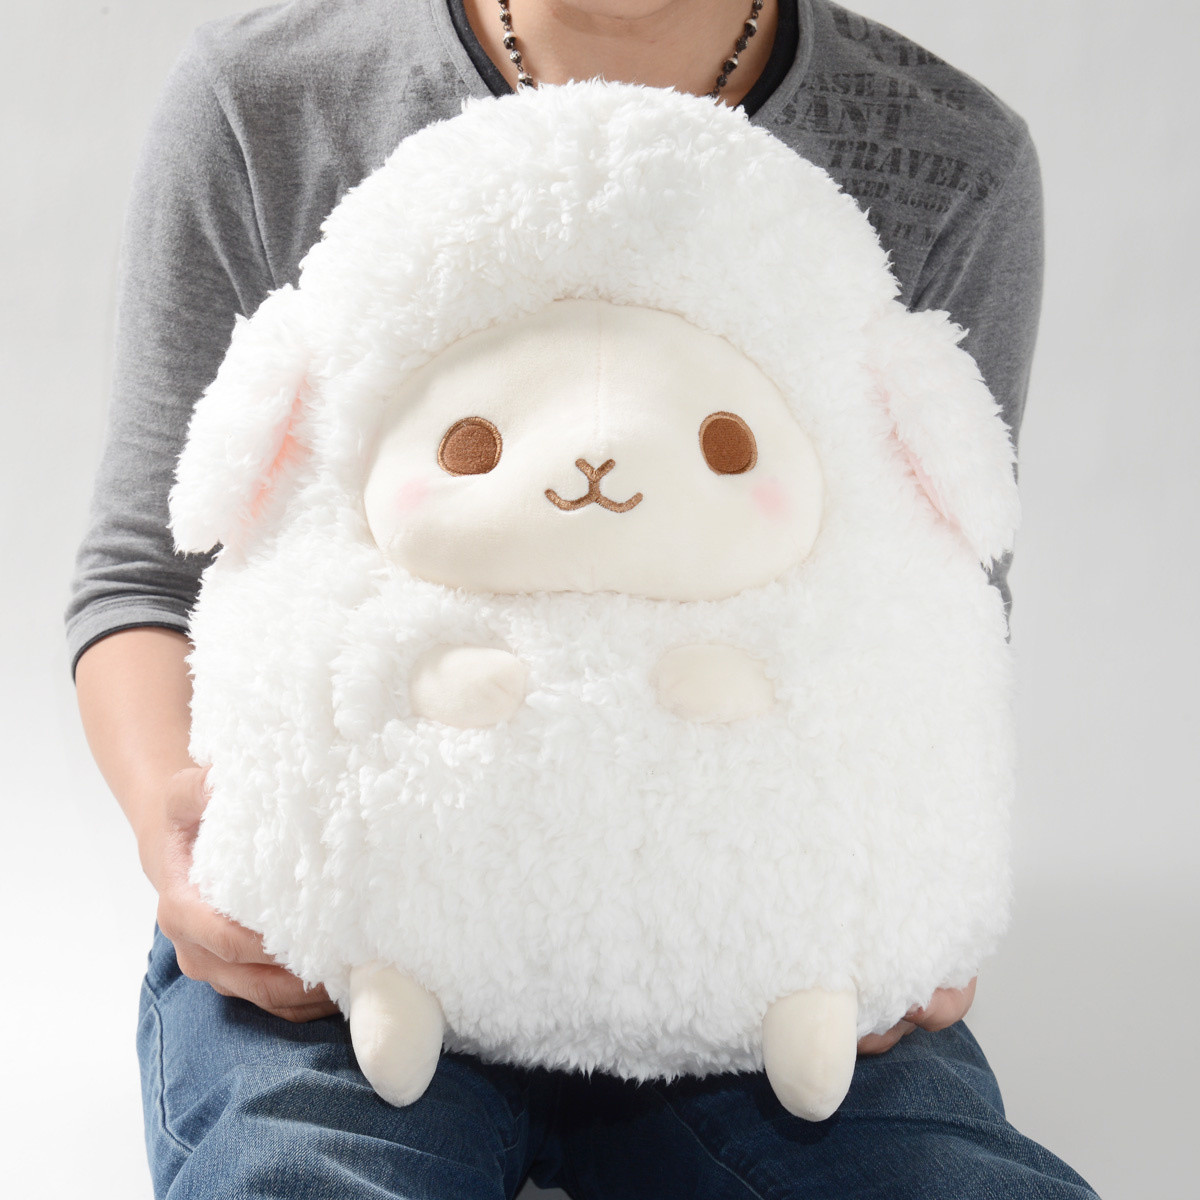 cute sheep stuffed animal